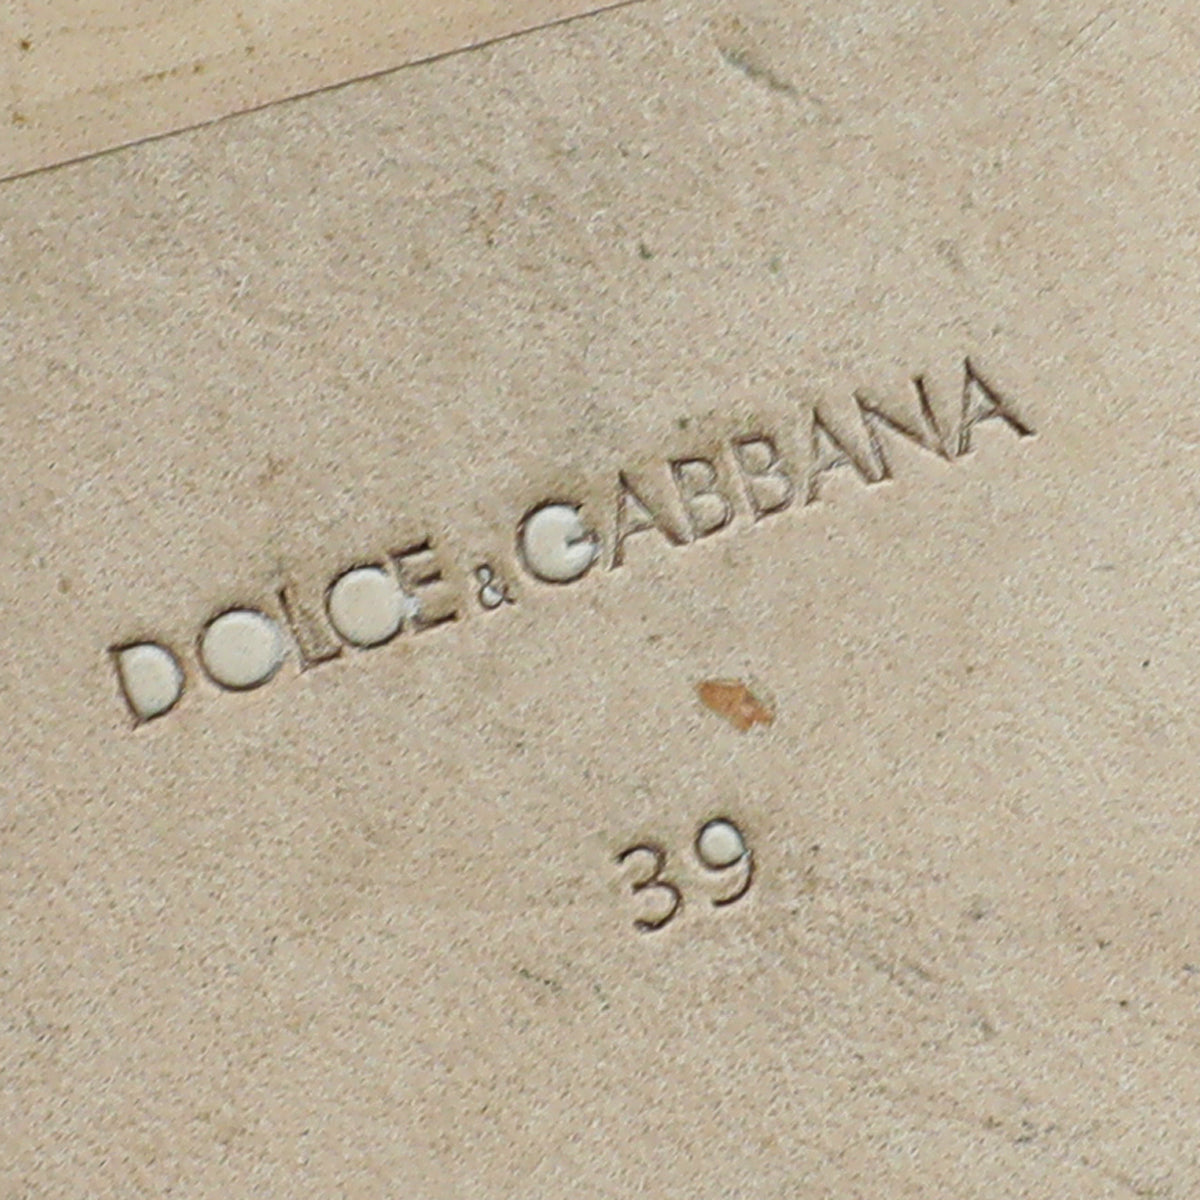 Dolce & Gabbana Black Lizard Embossed Flat Sandals 39